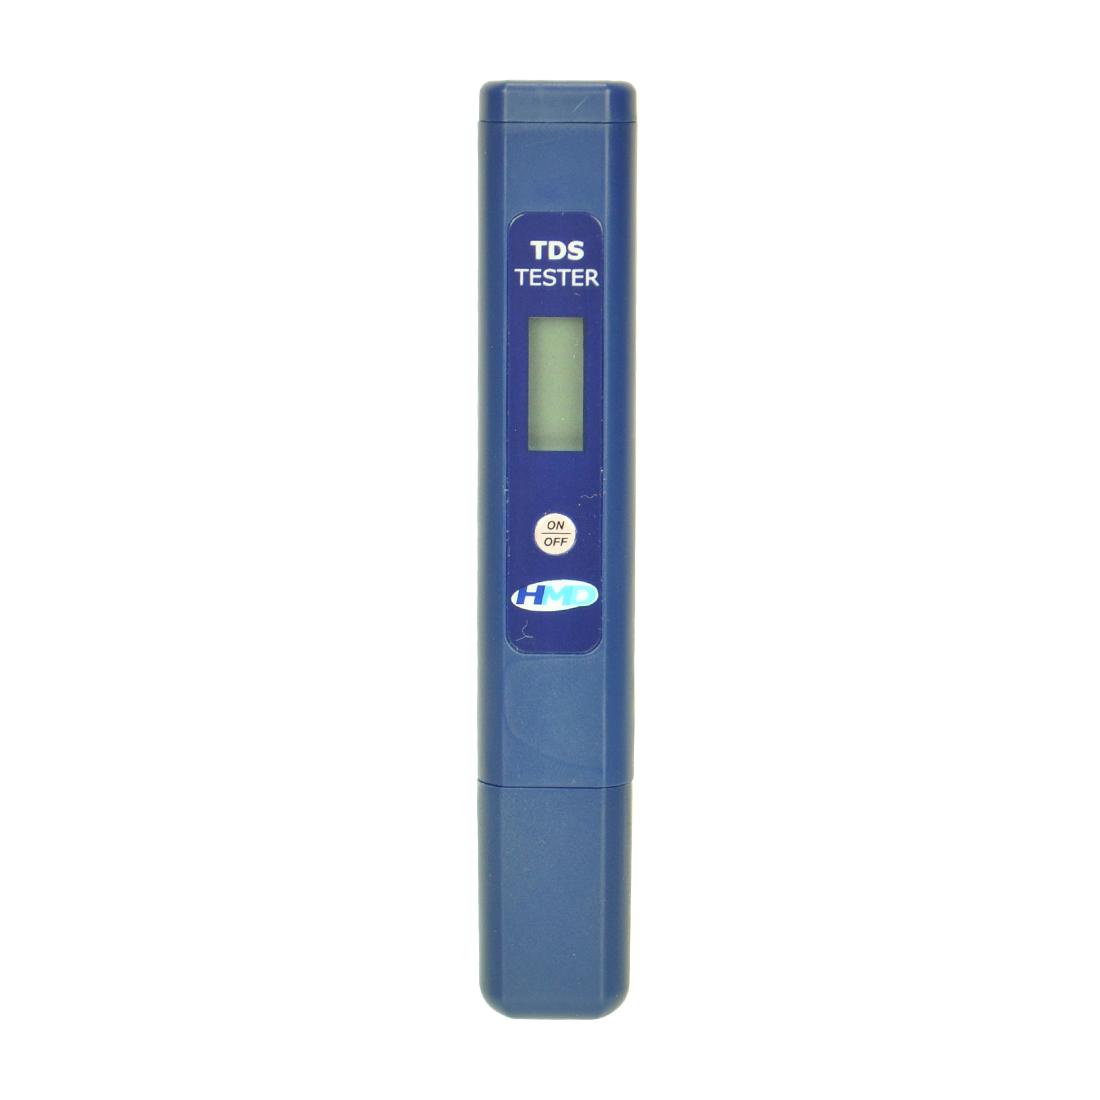 HM Digital Handheld TDS Meter